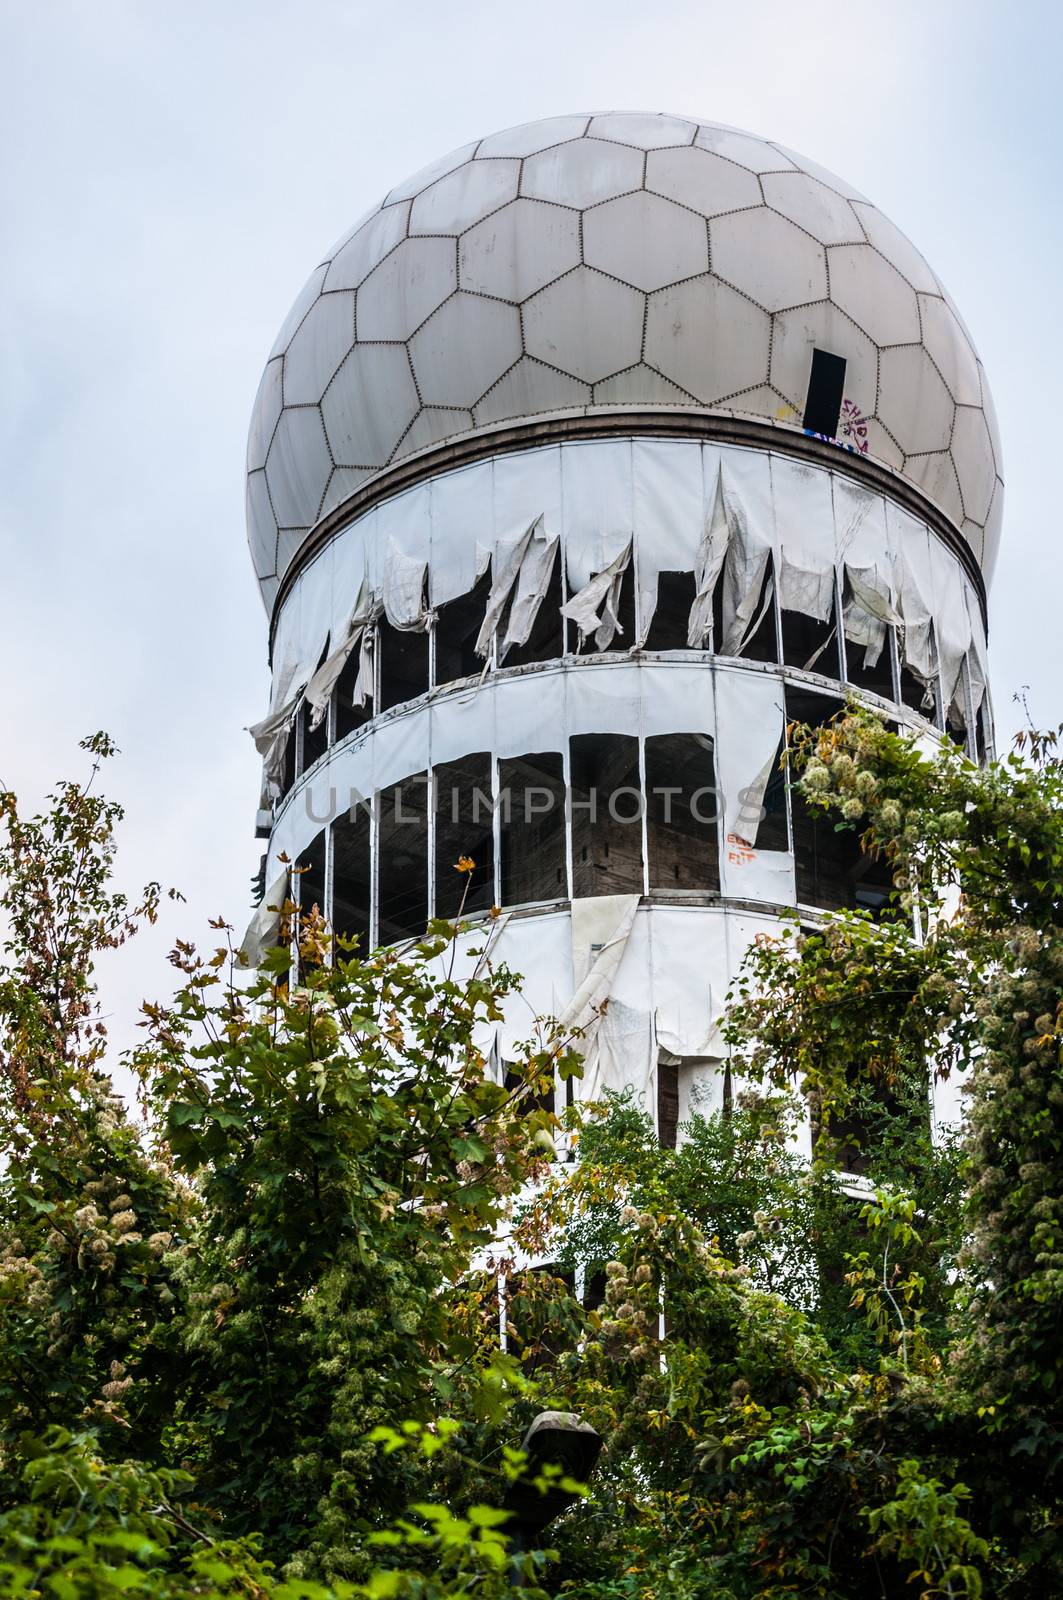 former NSA listening station on the Teufelsberg in Berlin